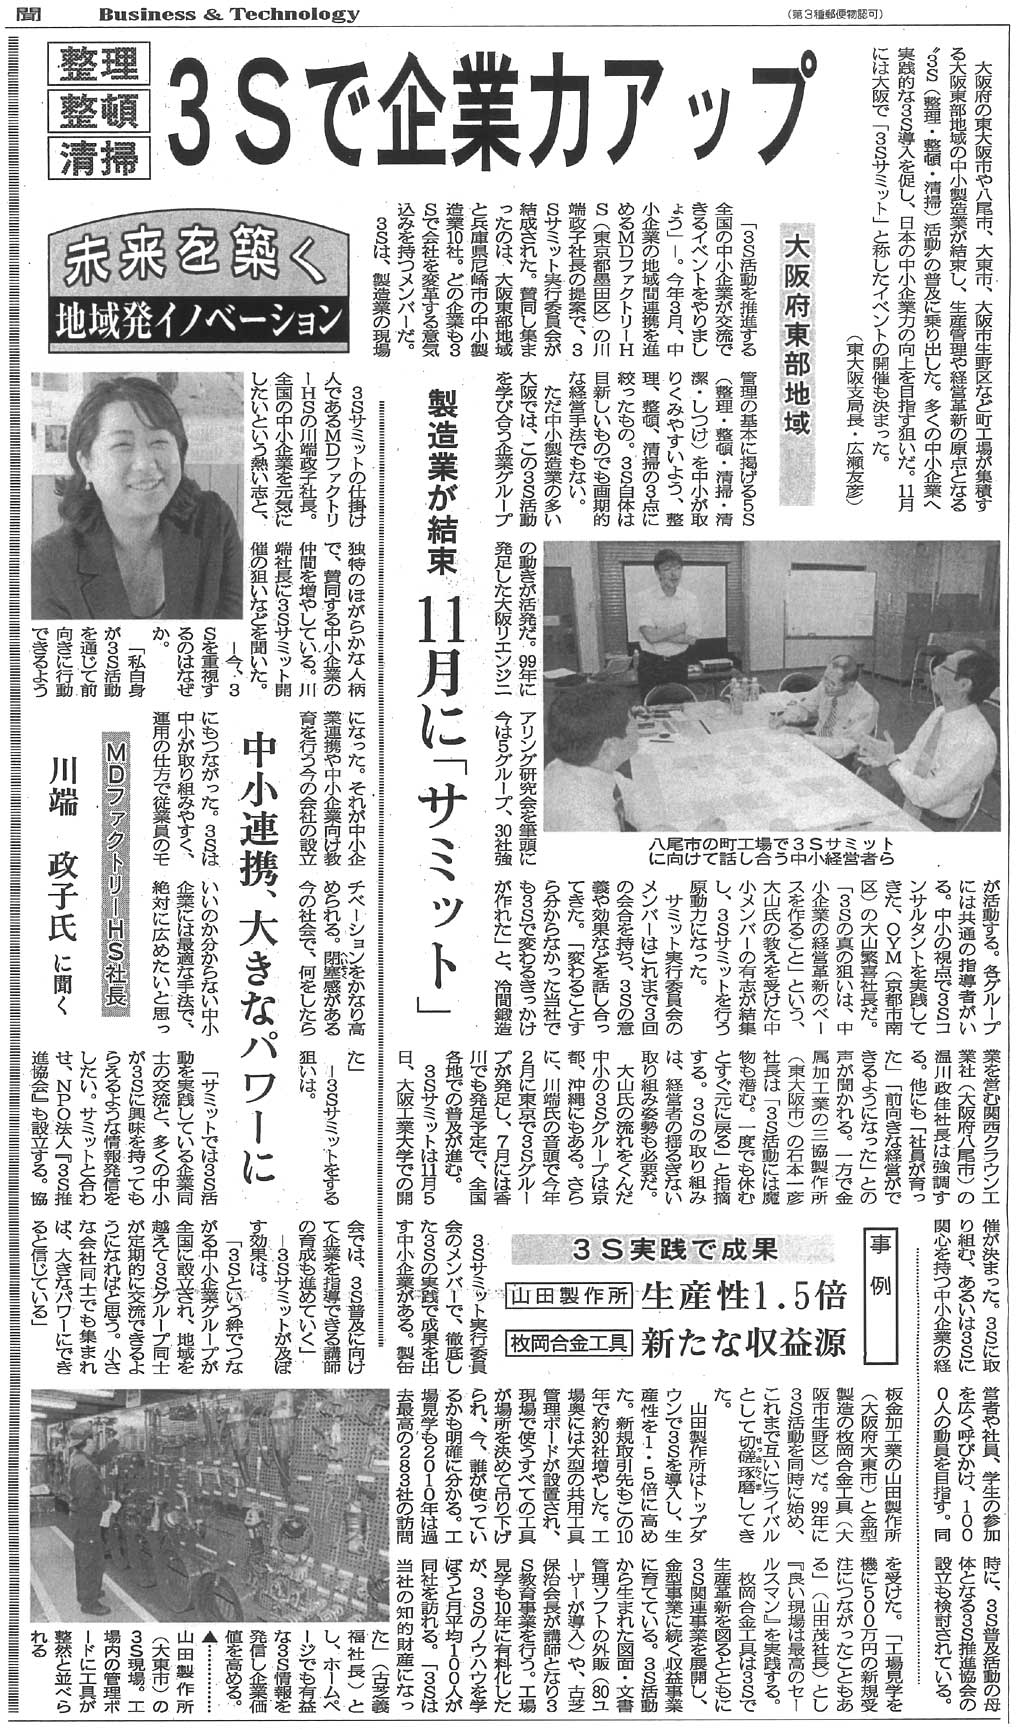 産業情報化新聞社『日本一明るい経済新聞』 AKS0041 明るい会社認定証